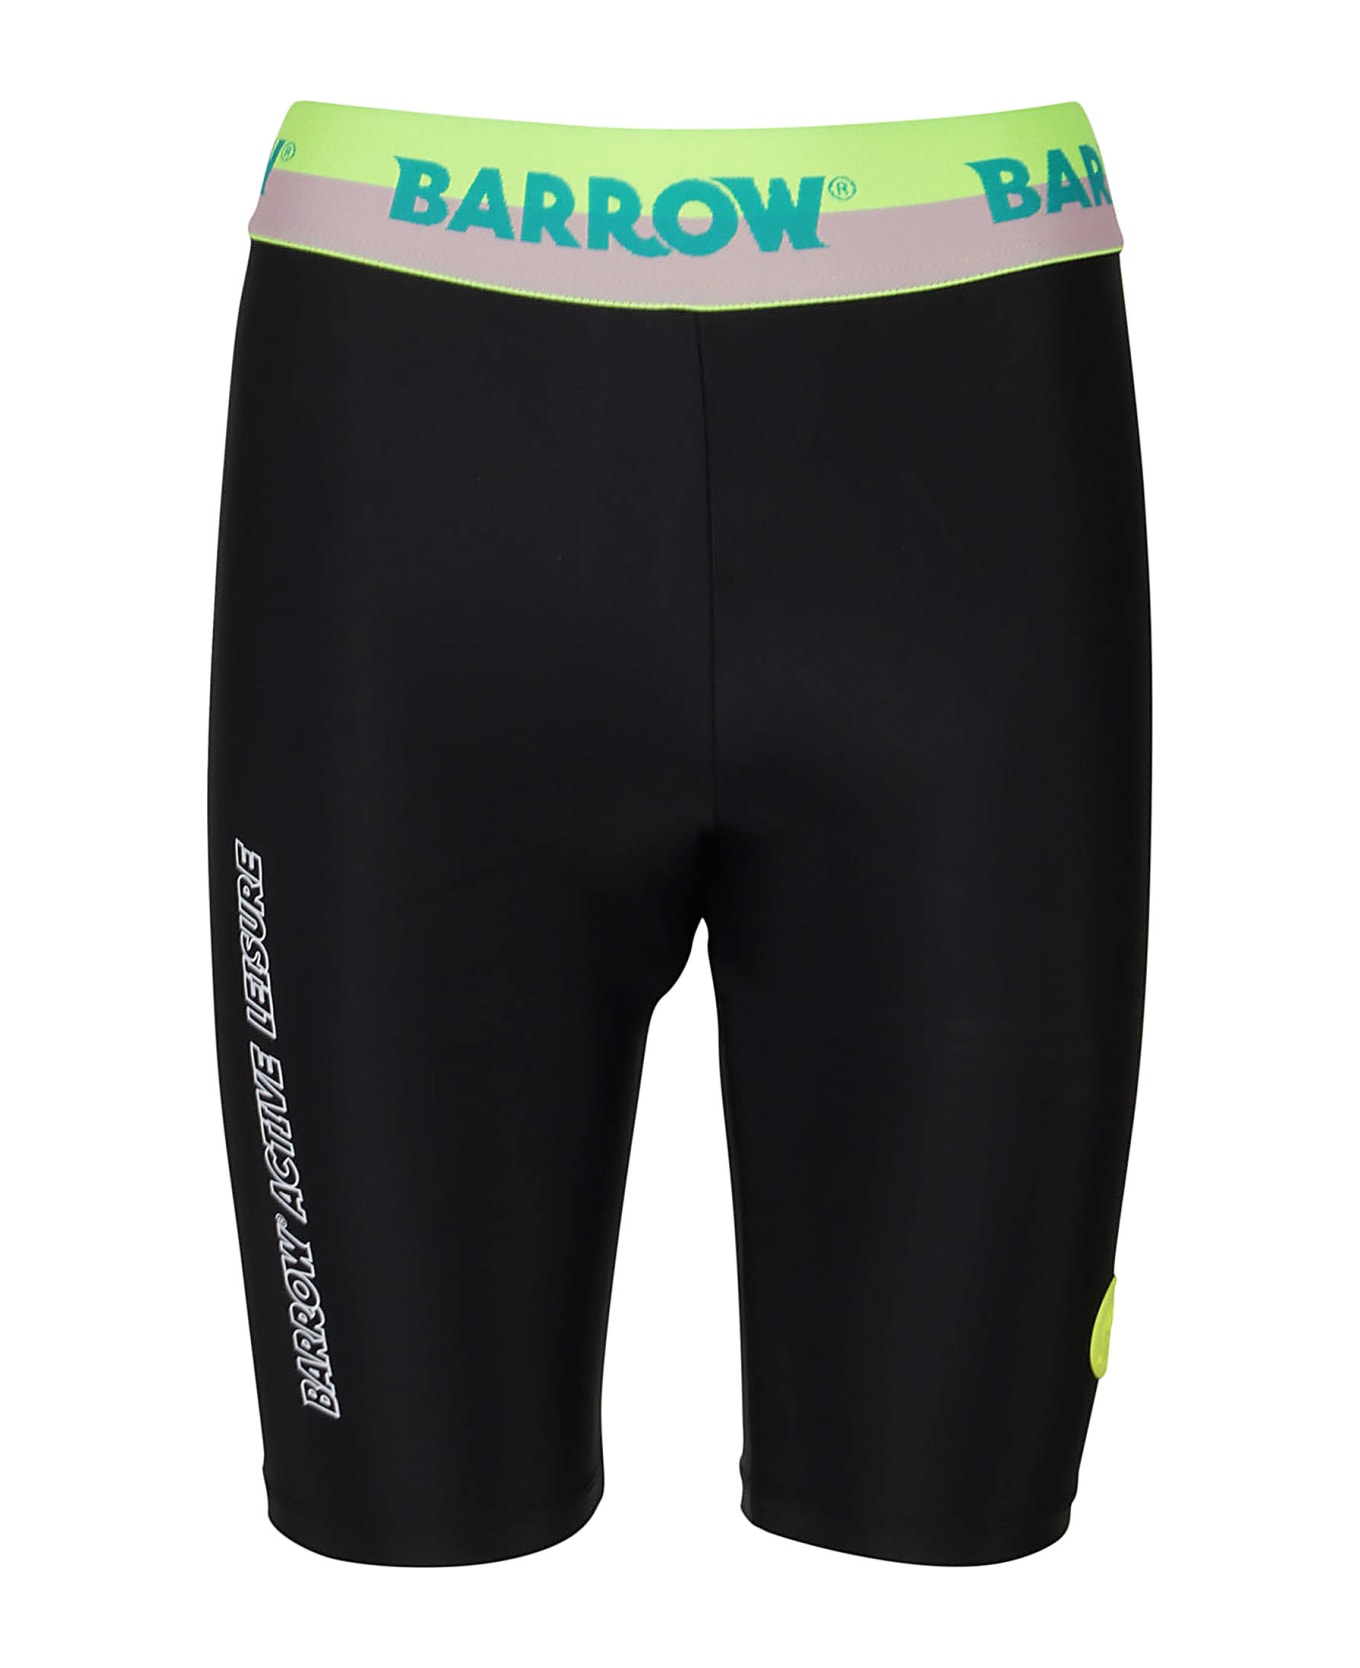 Barrow Cycling Short - Nero/black ショートパンツ